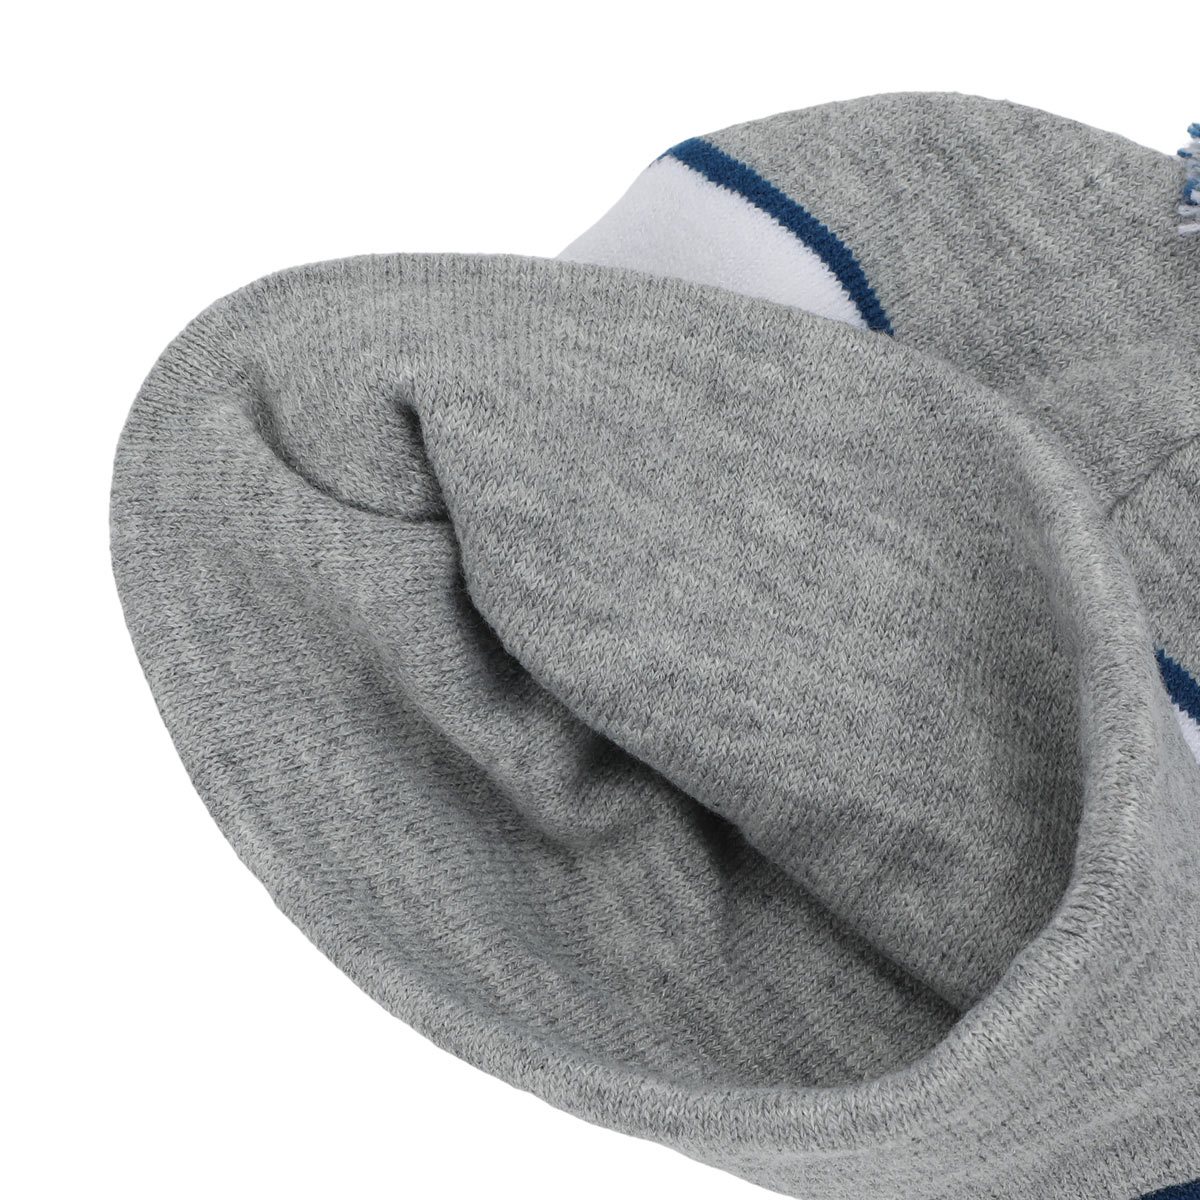 Unisex Black Star Wars Imperial Scarf & Cuffed Knit Hat with Pom Set